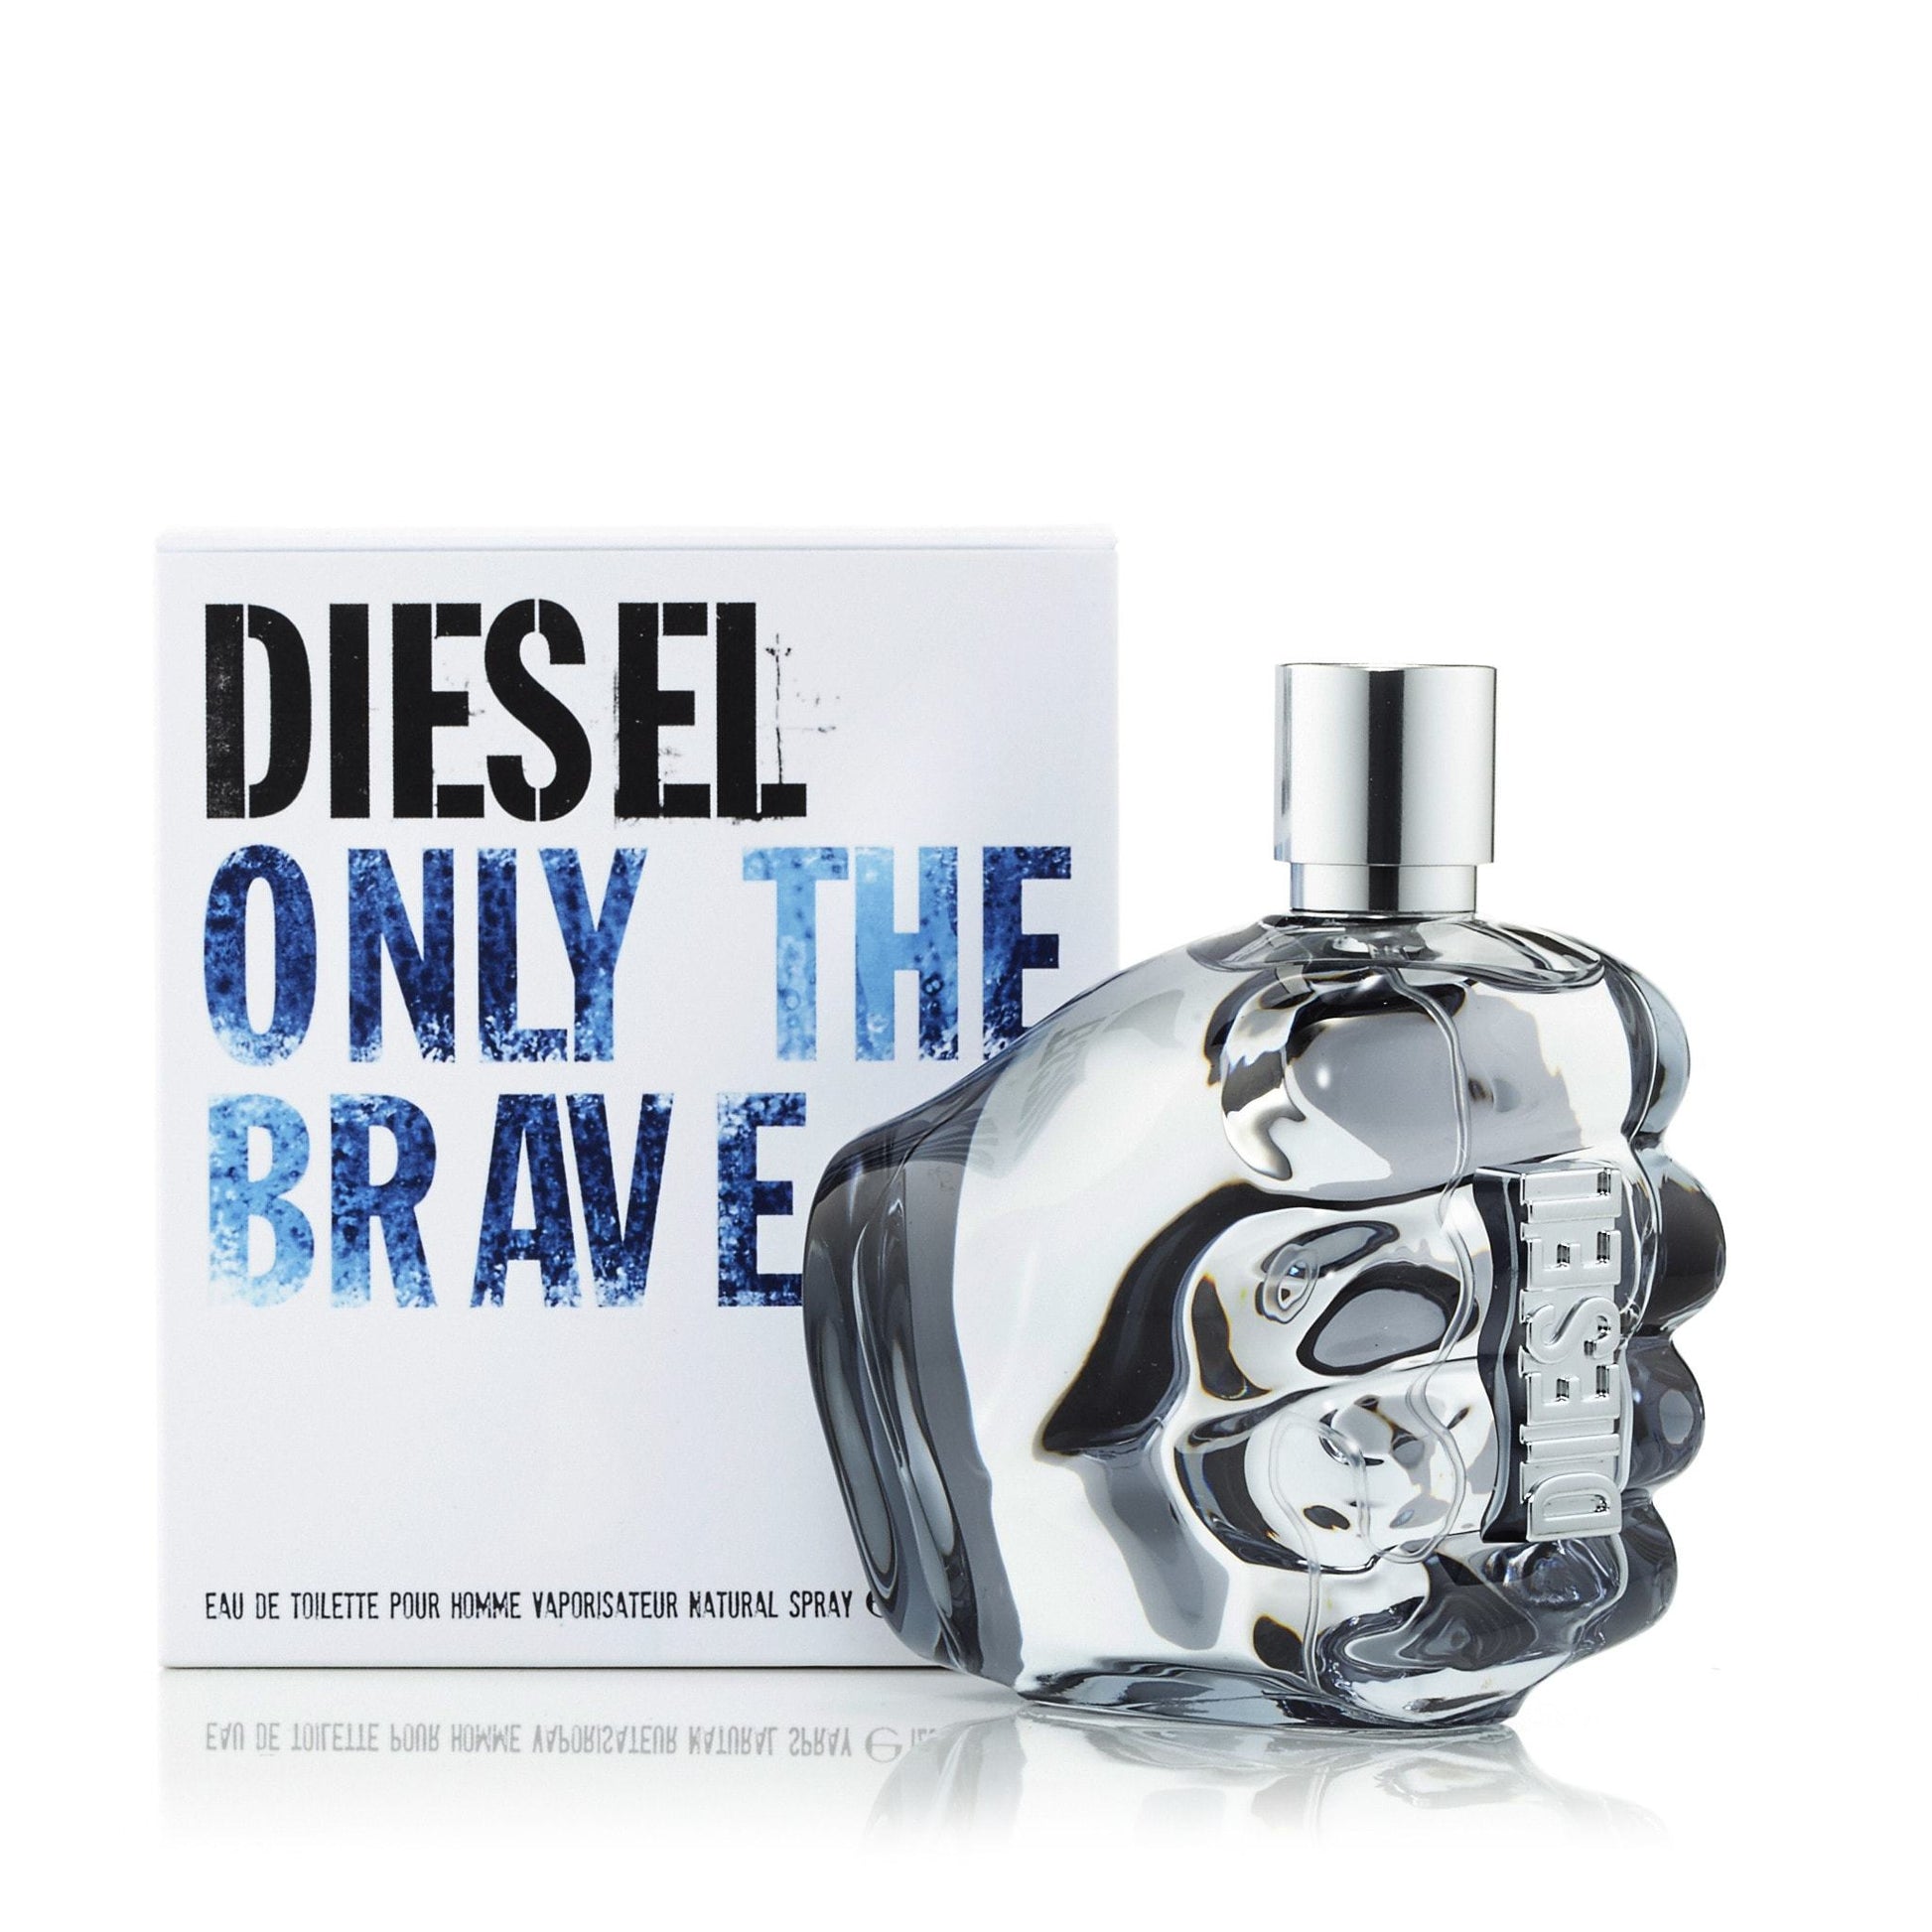 Only The Brave Eau de Toilette Spray for Men by Diesel, Product image 10